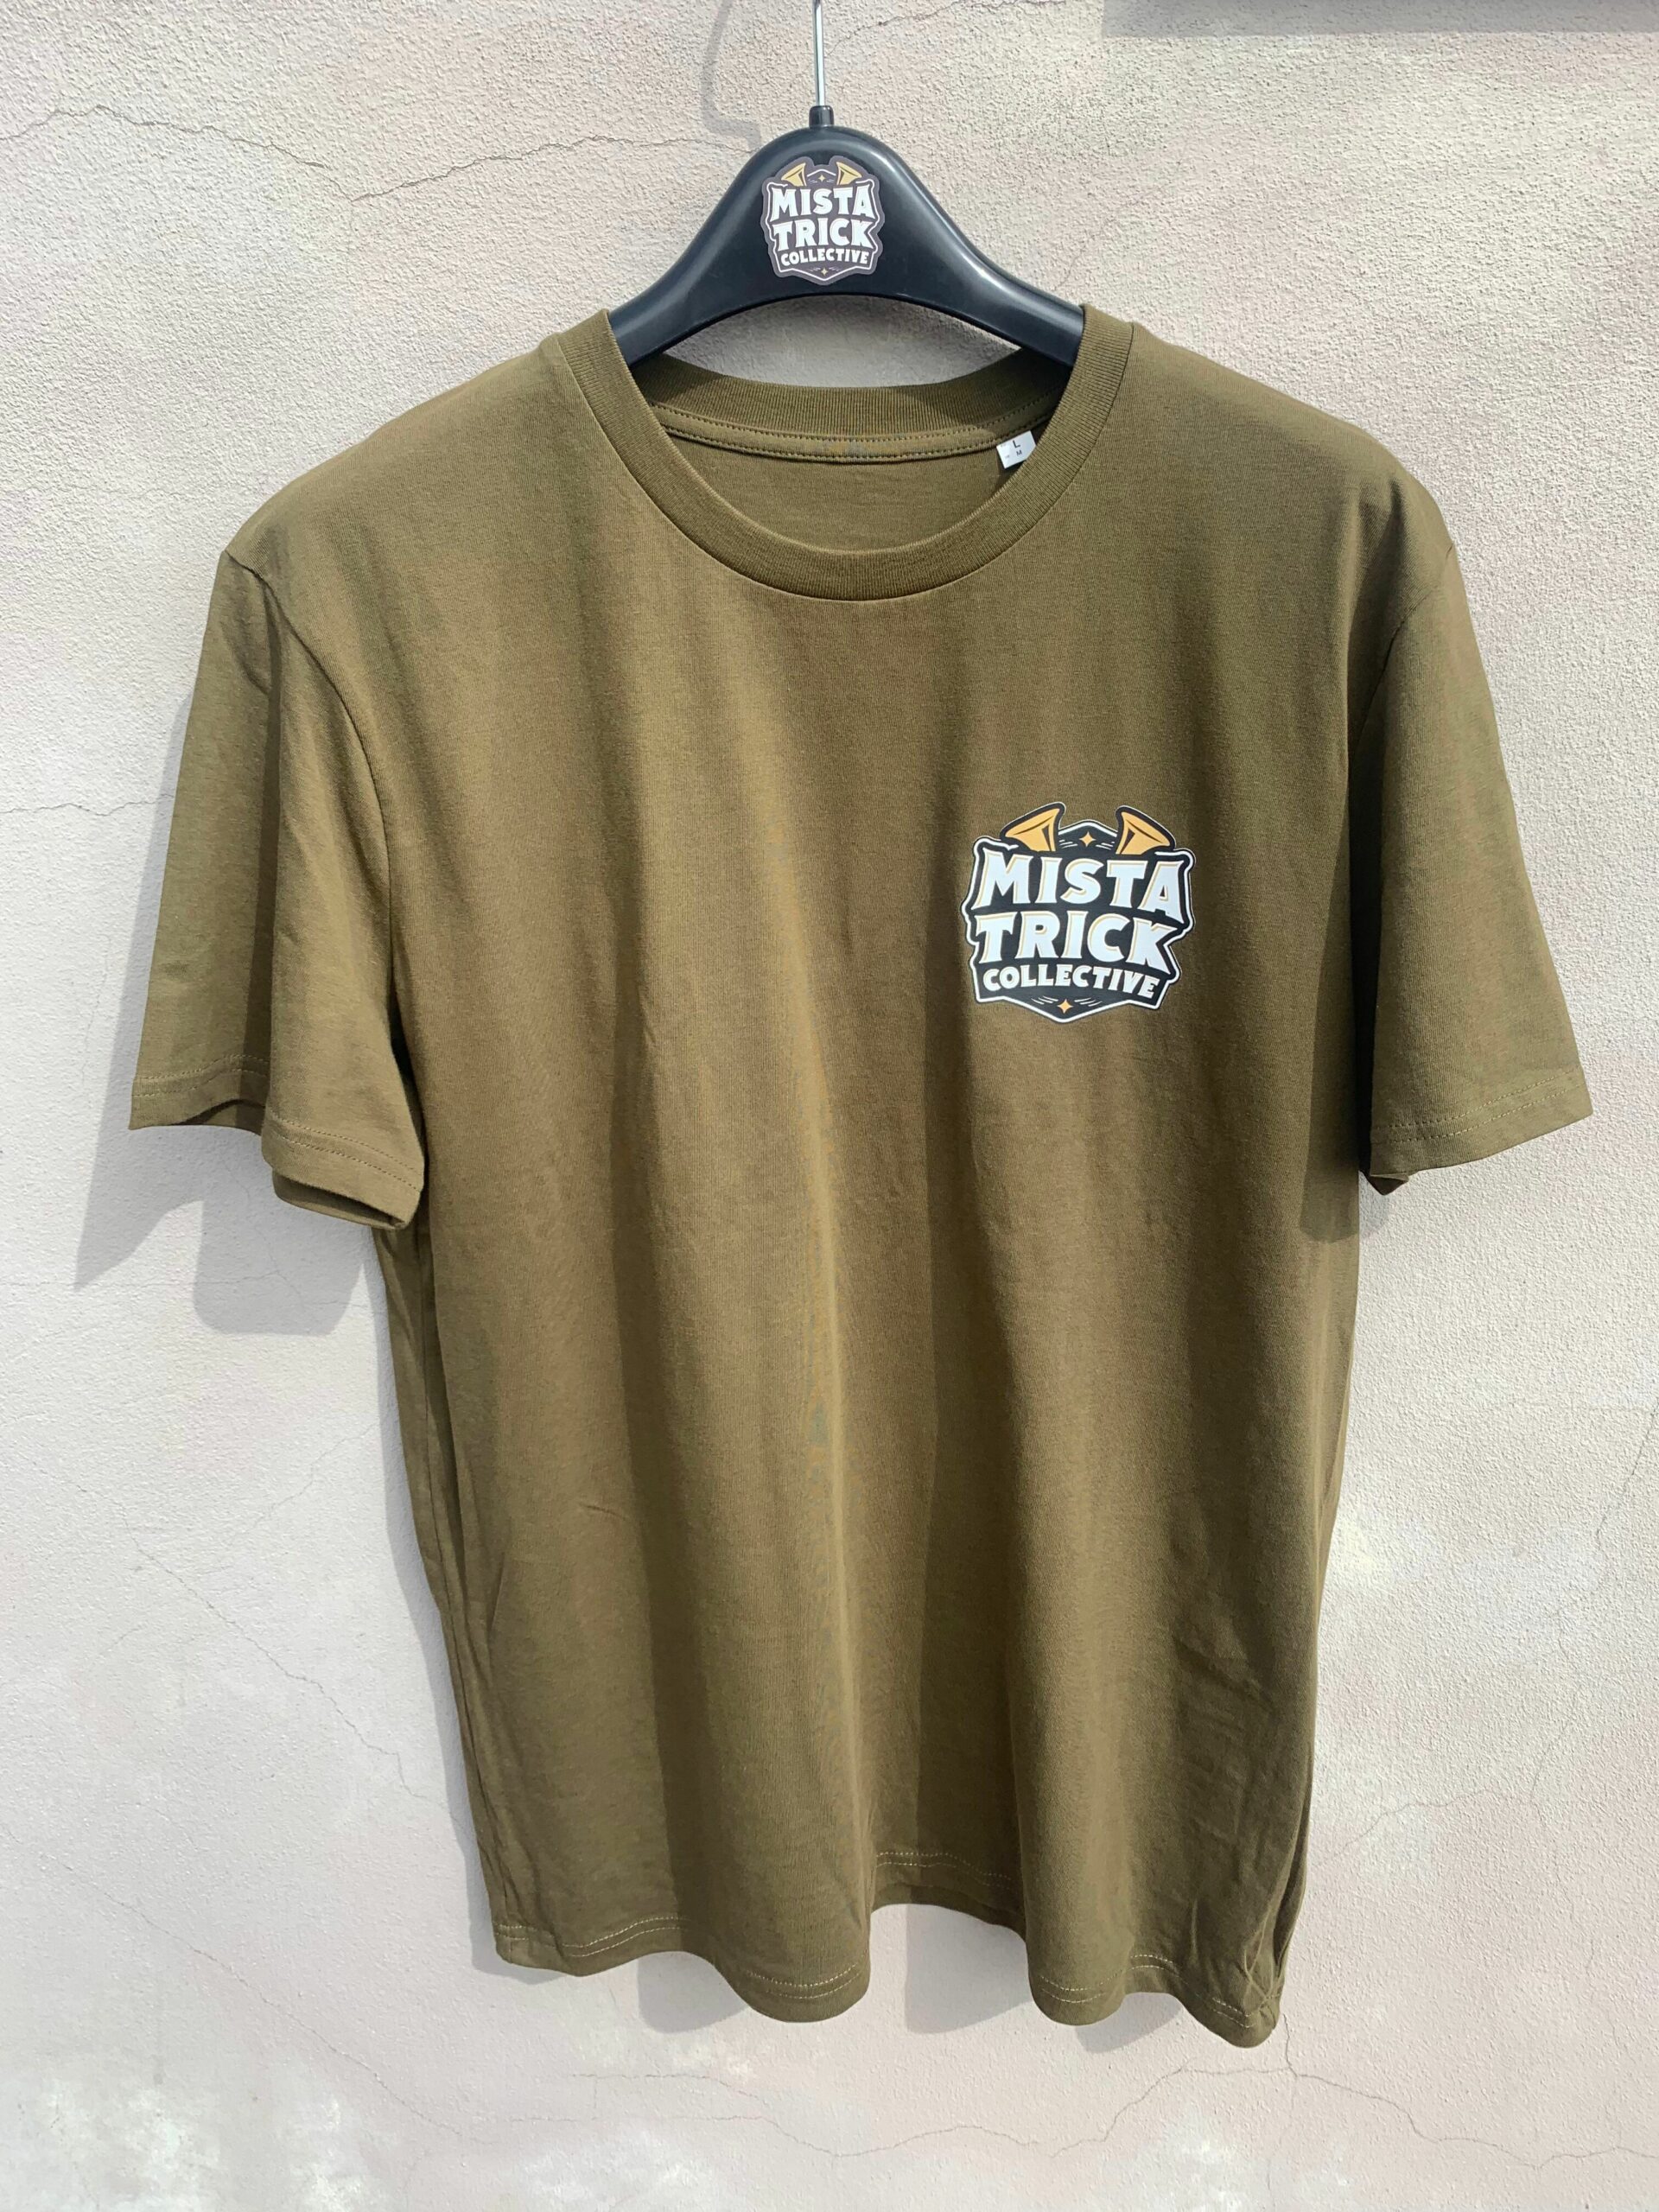 Mista Trick Collective - Tshirt